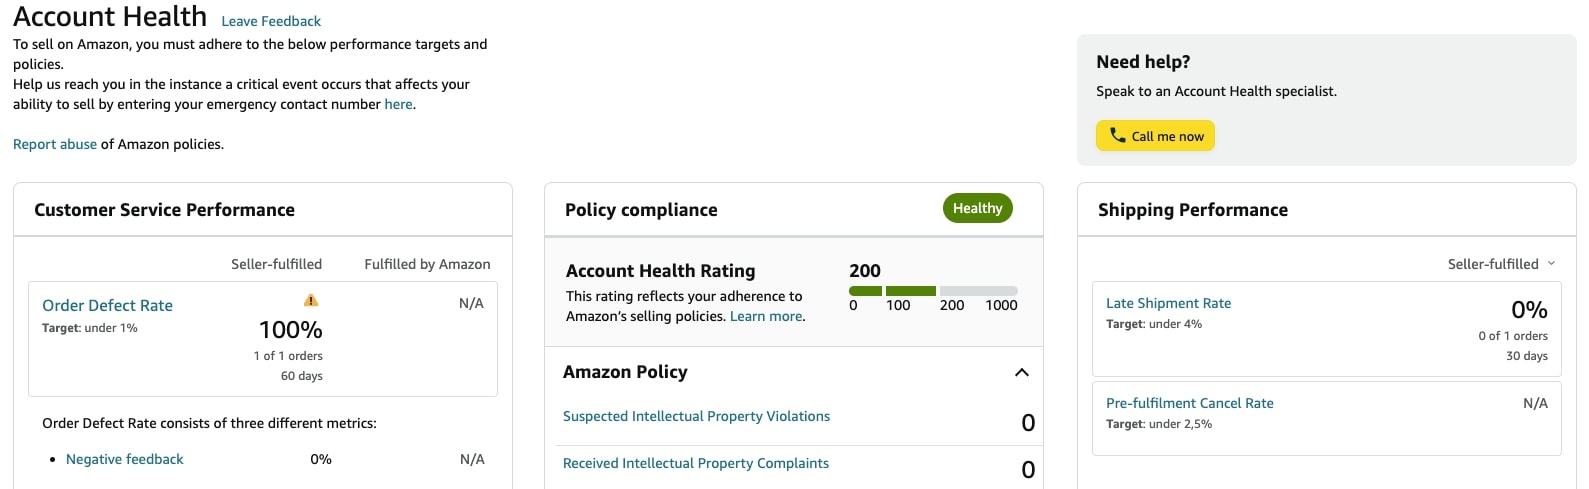 Amazon Marketplace Account Health